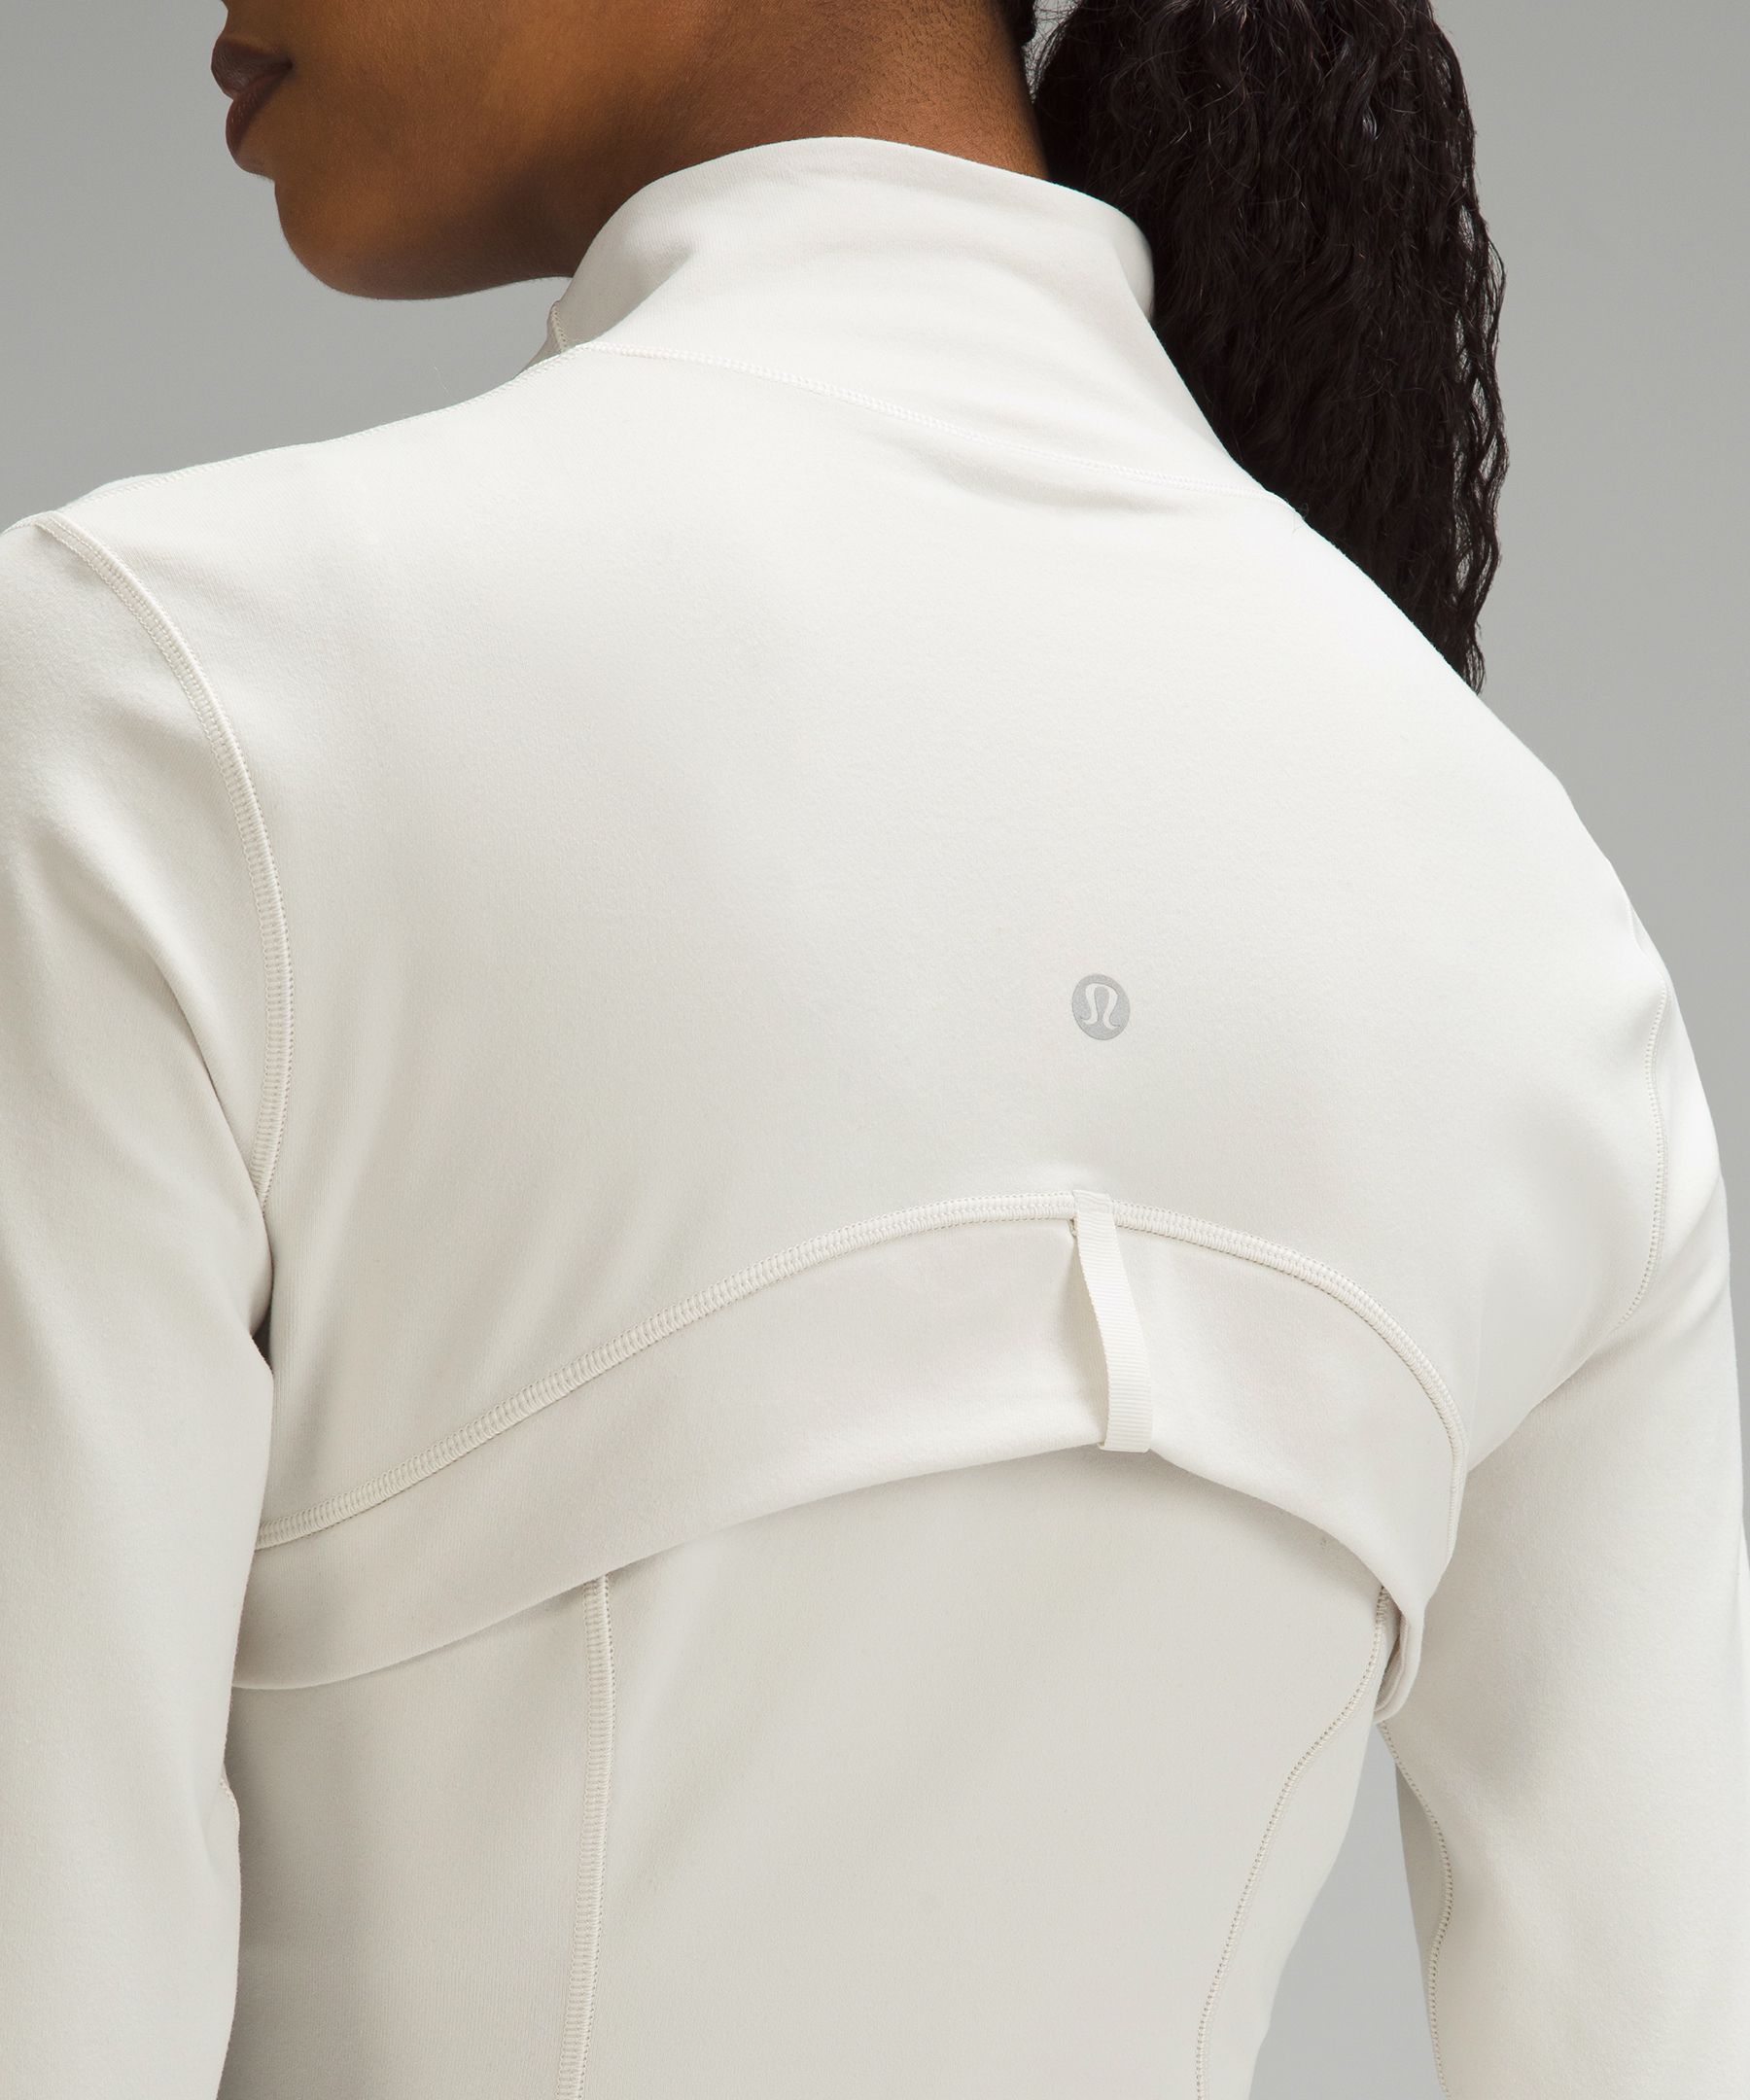 Define Jacket *Luon, Women's Hoodies & Sweatshirts, lululemon in 2023